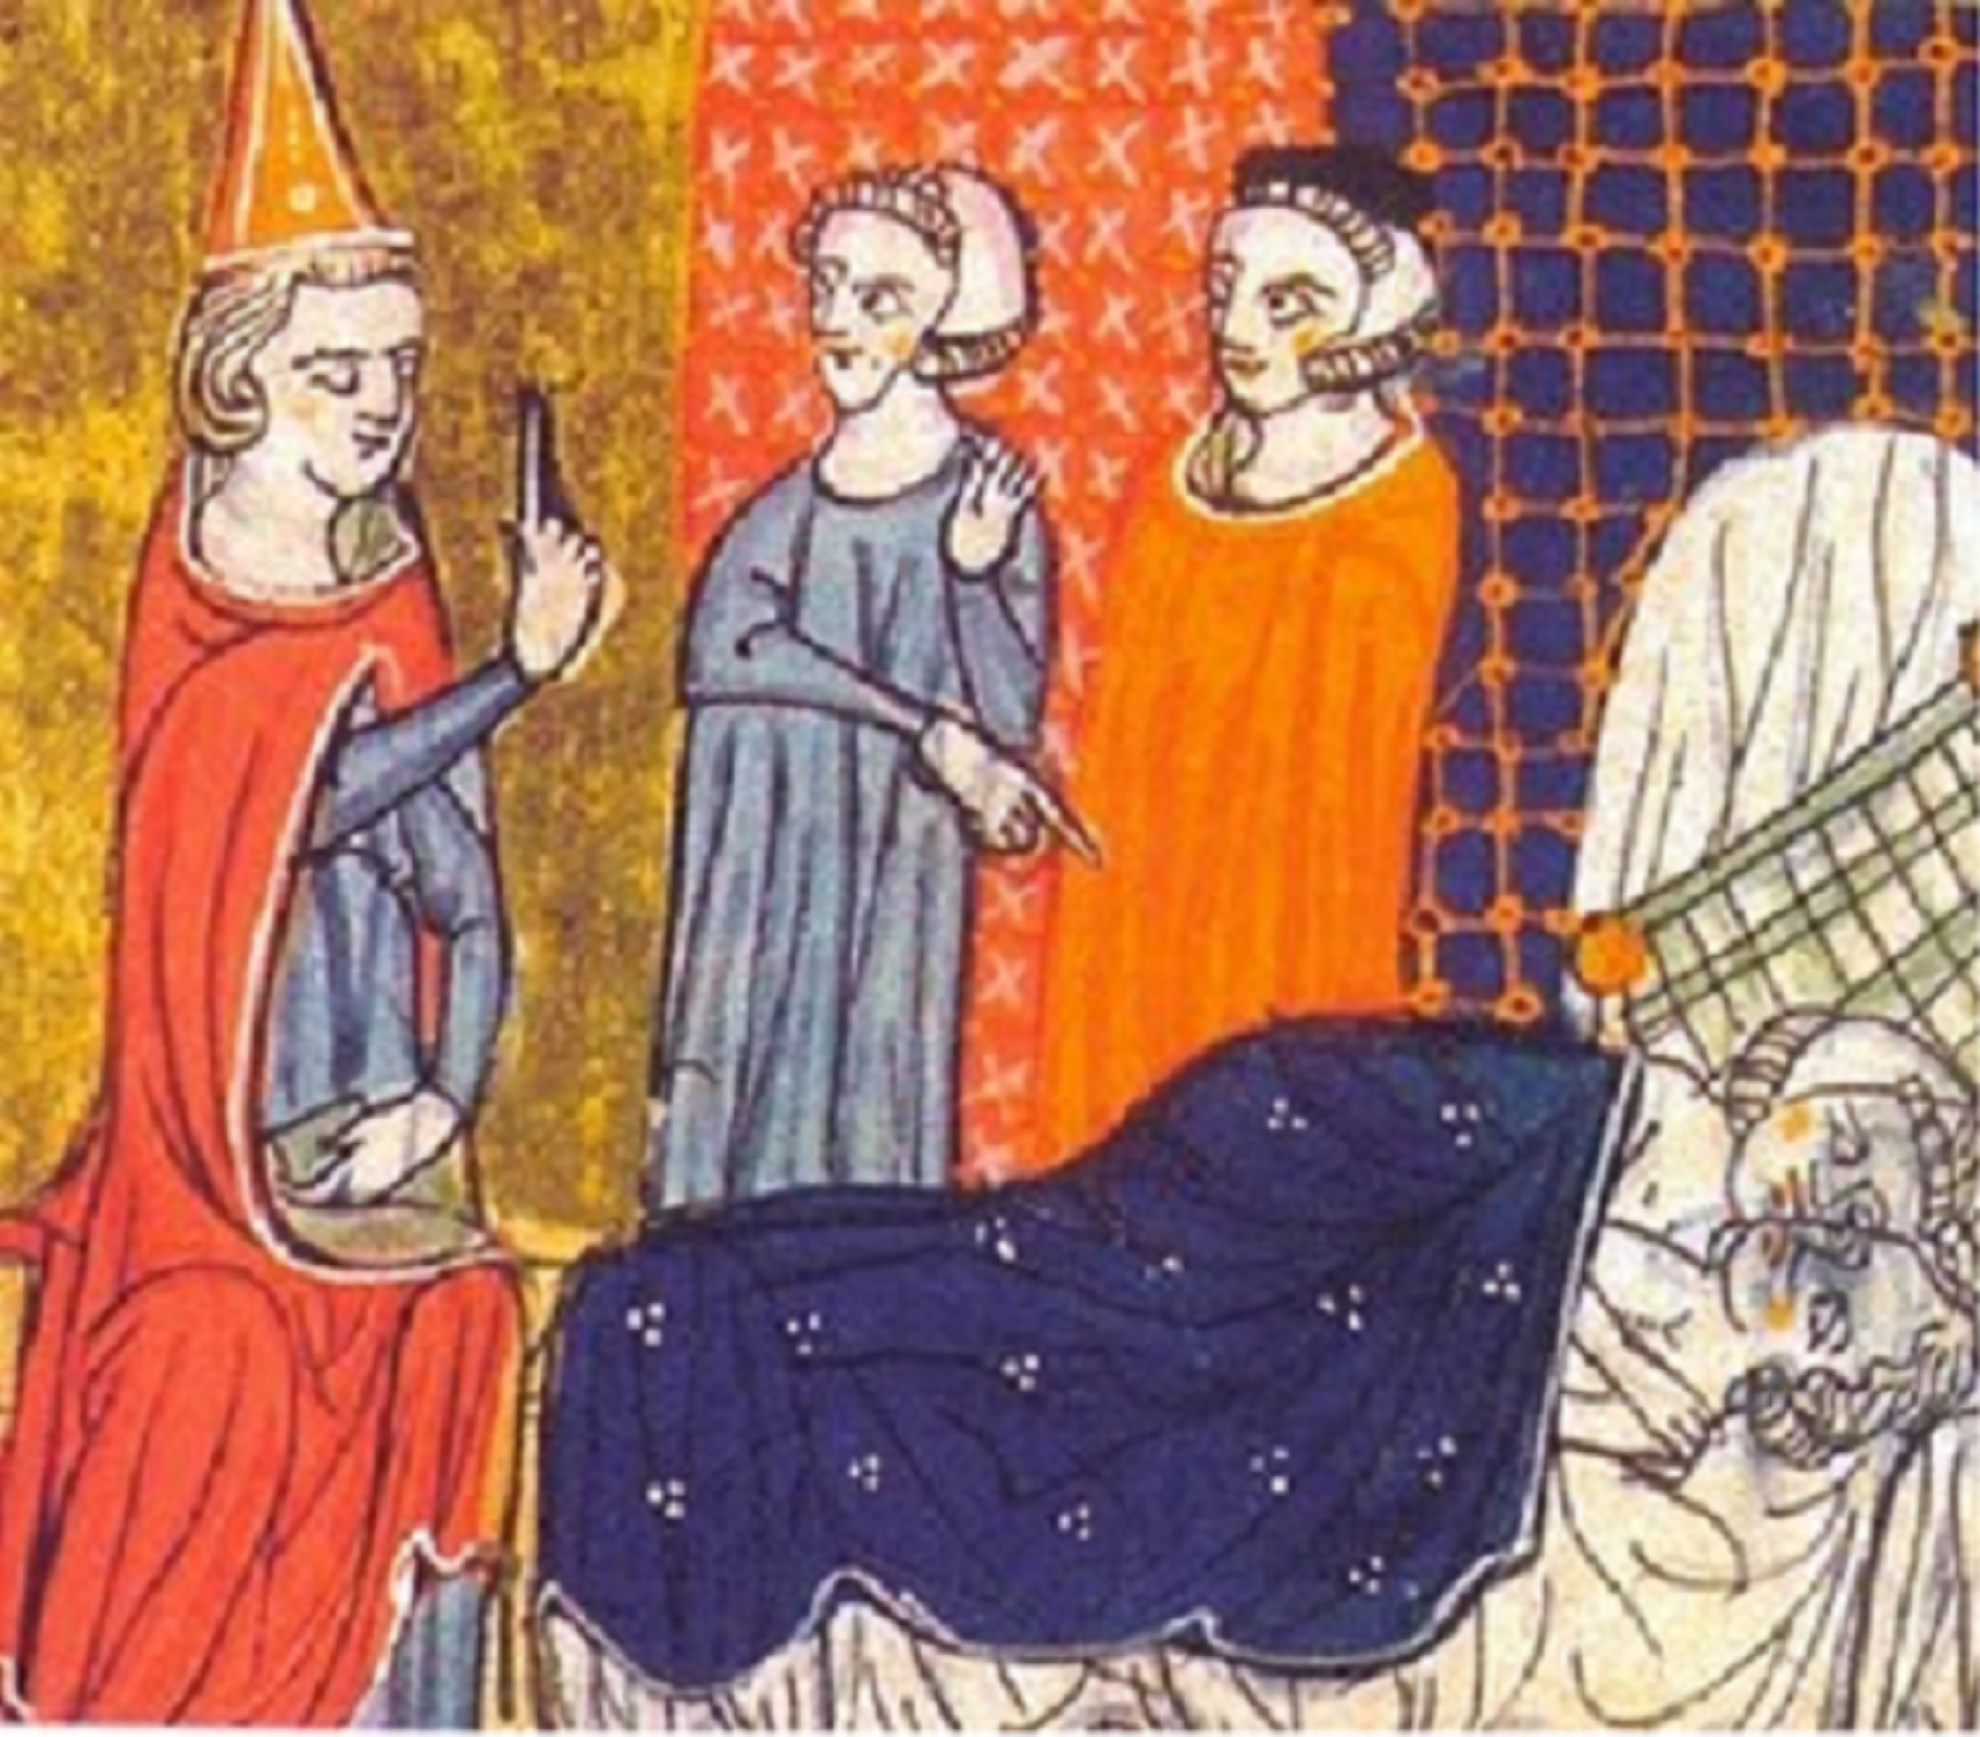 Miniatura que representa a Pere y Maria engendrando el futuro Jaume I. Font Arxiu de la Corona de Aragón